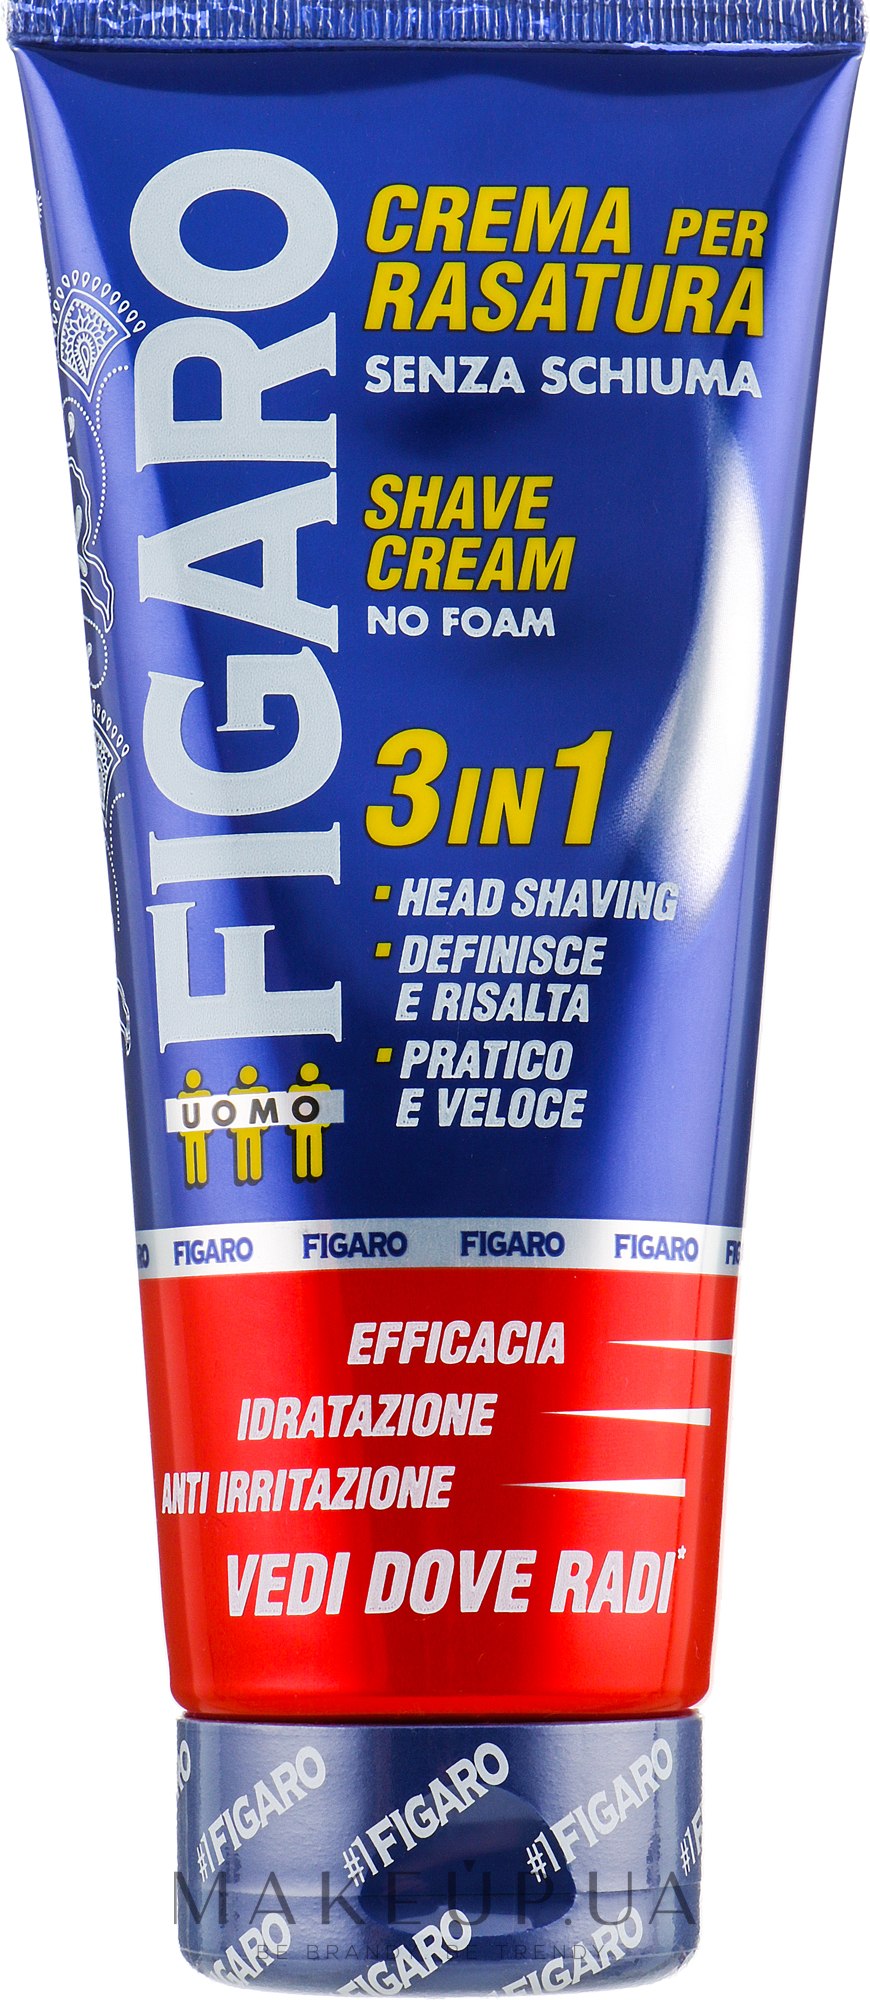 Средства для бритья figaro